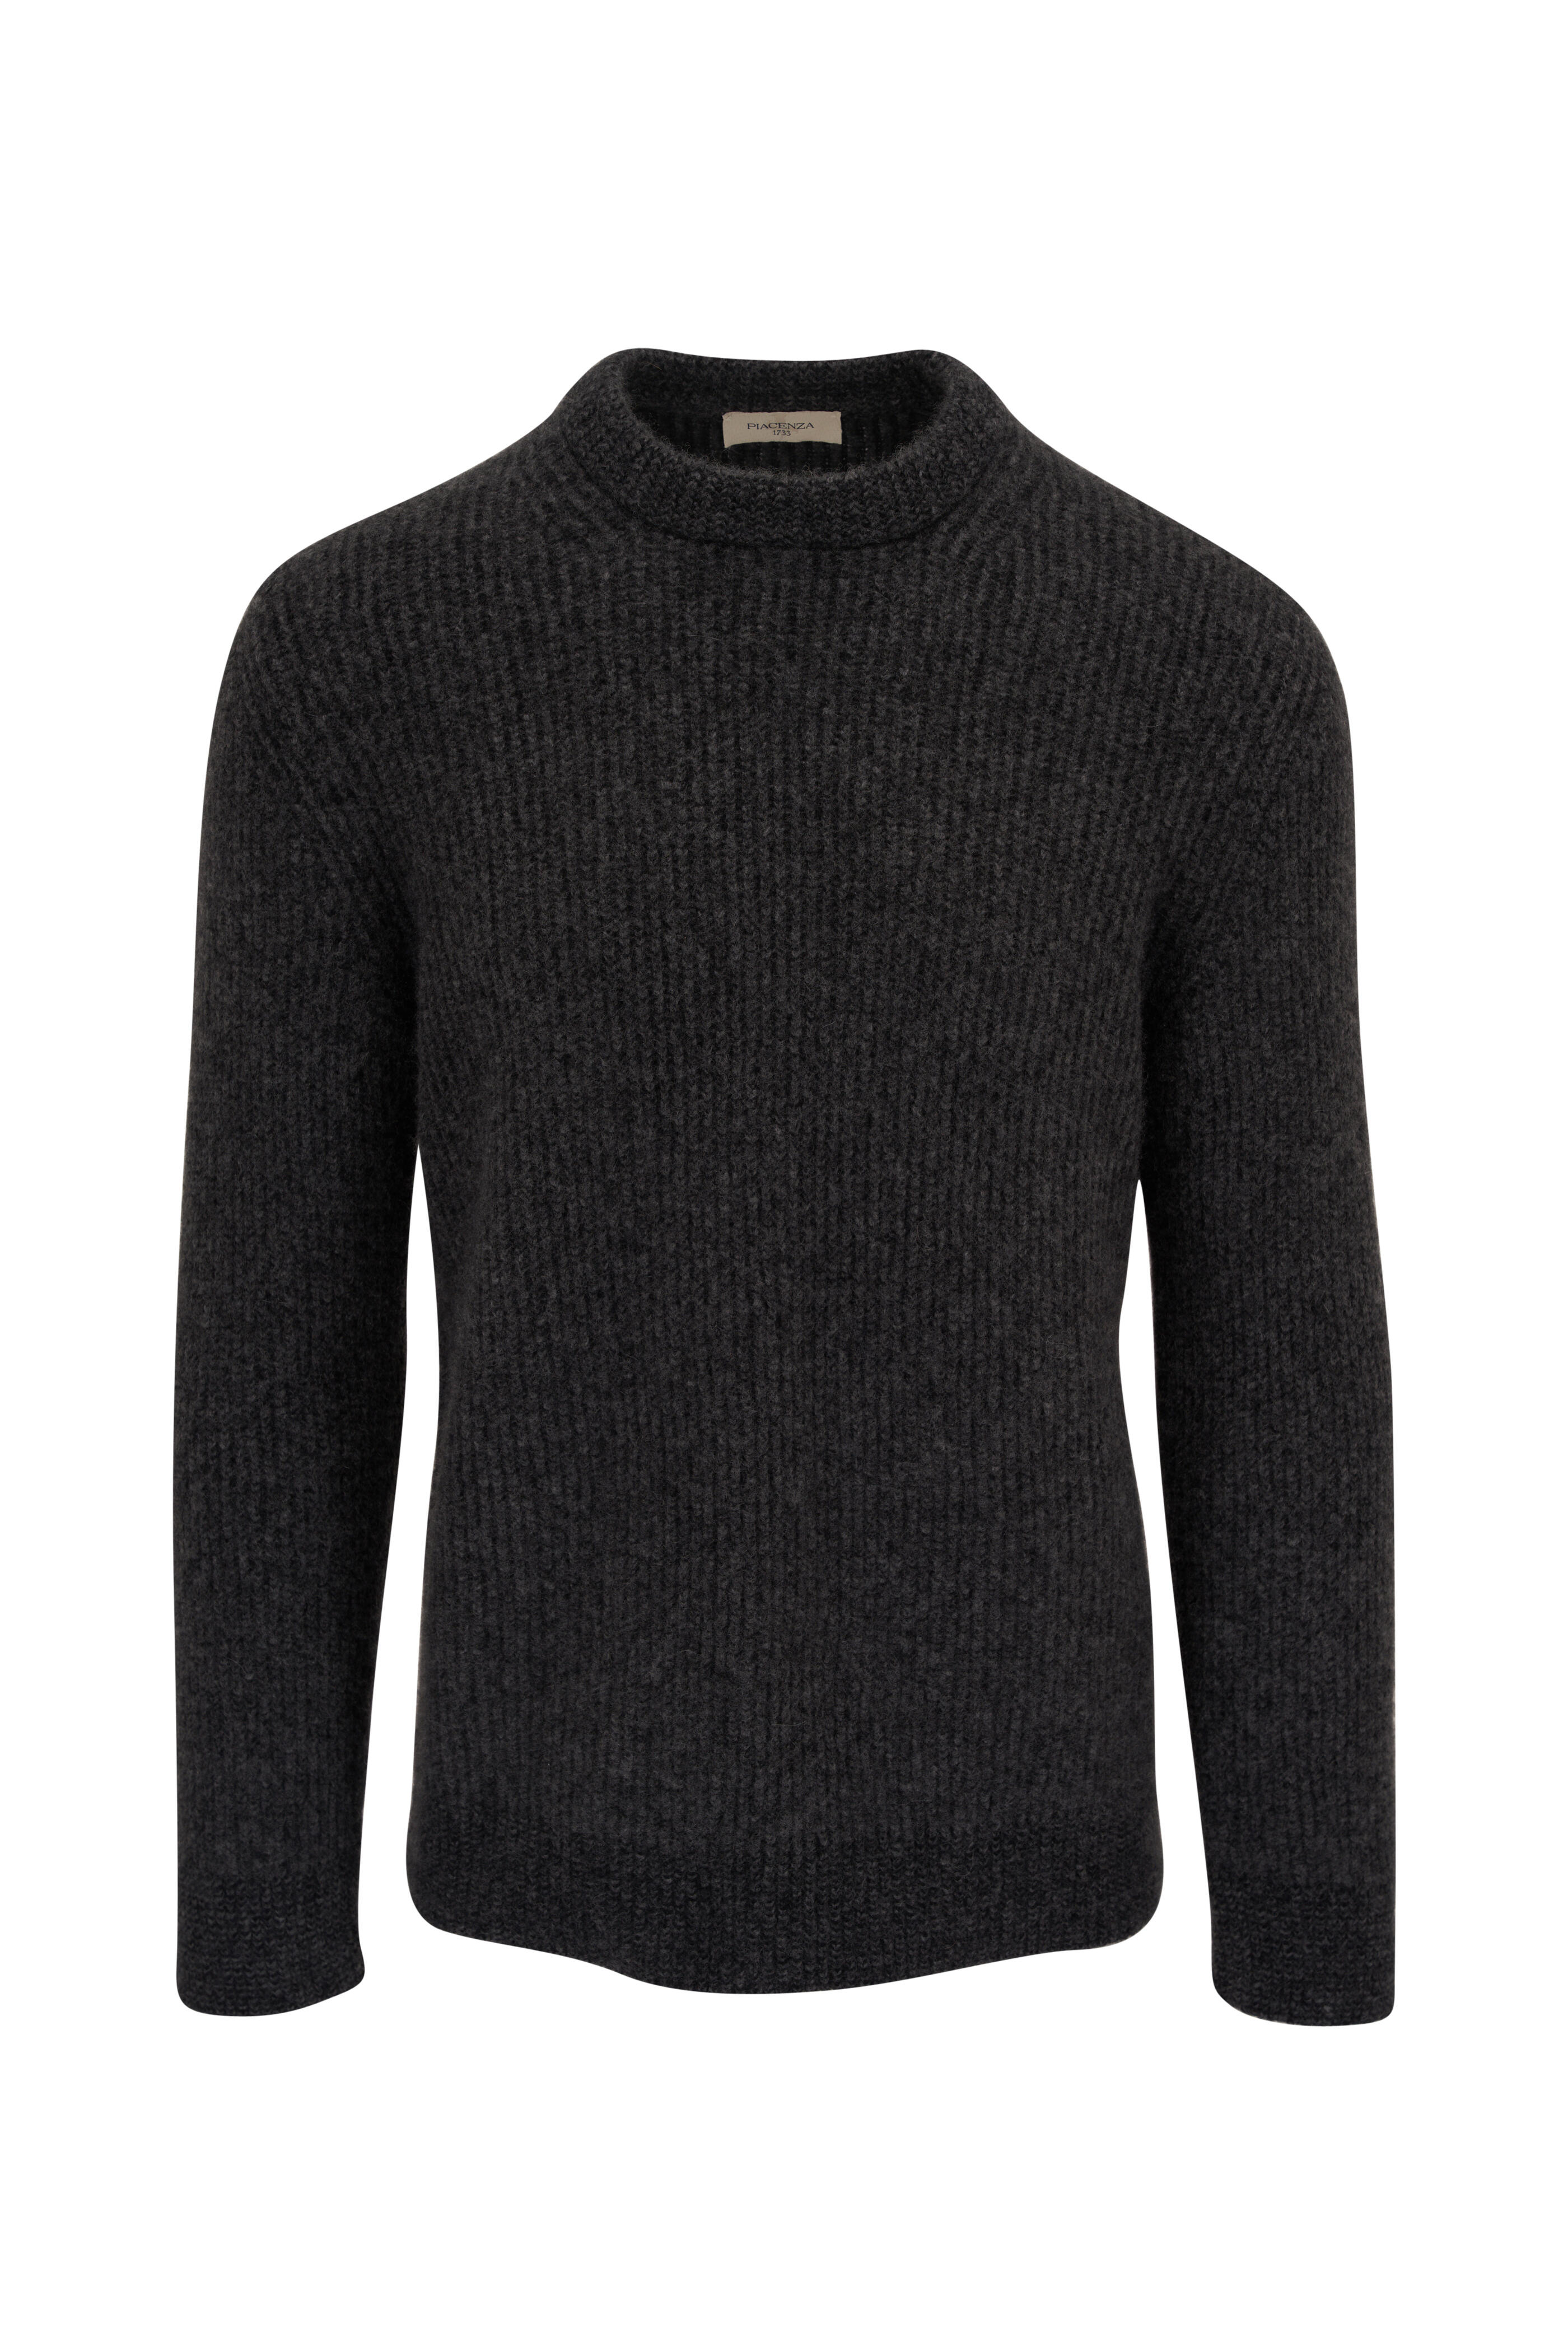 Fratelli Piacenza - Charcoal Gray Cashmere Blend Crewneck Sweater